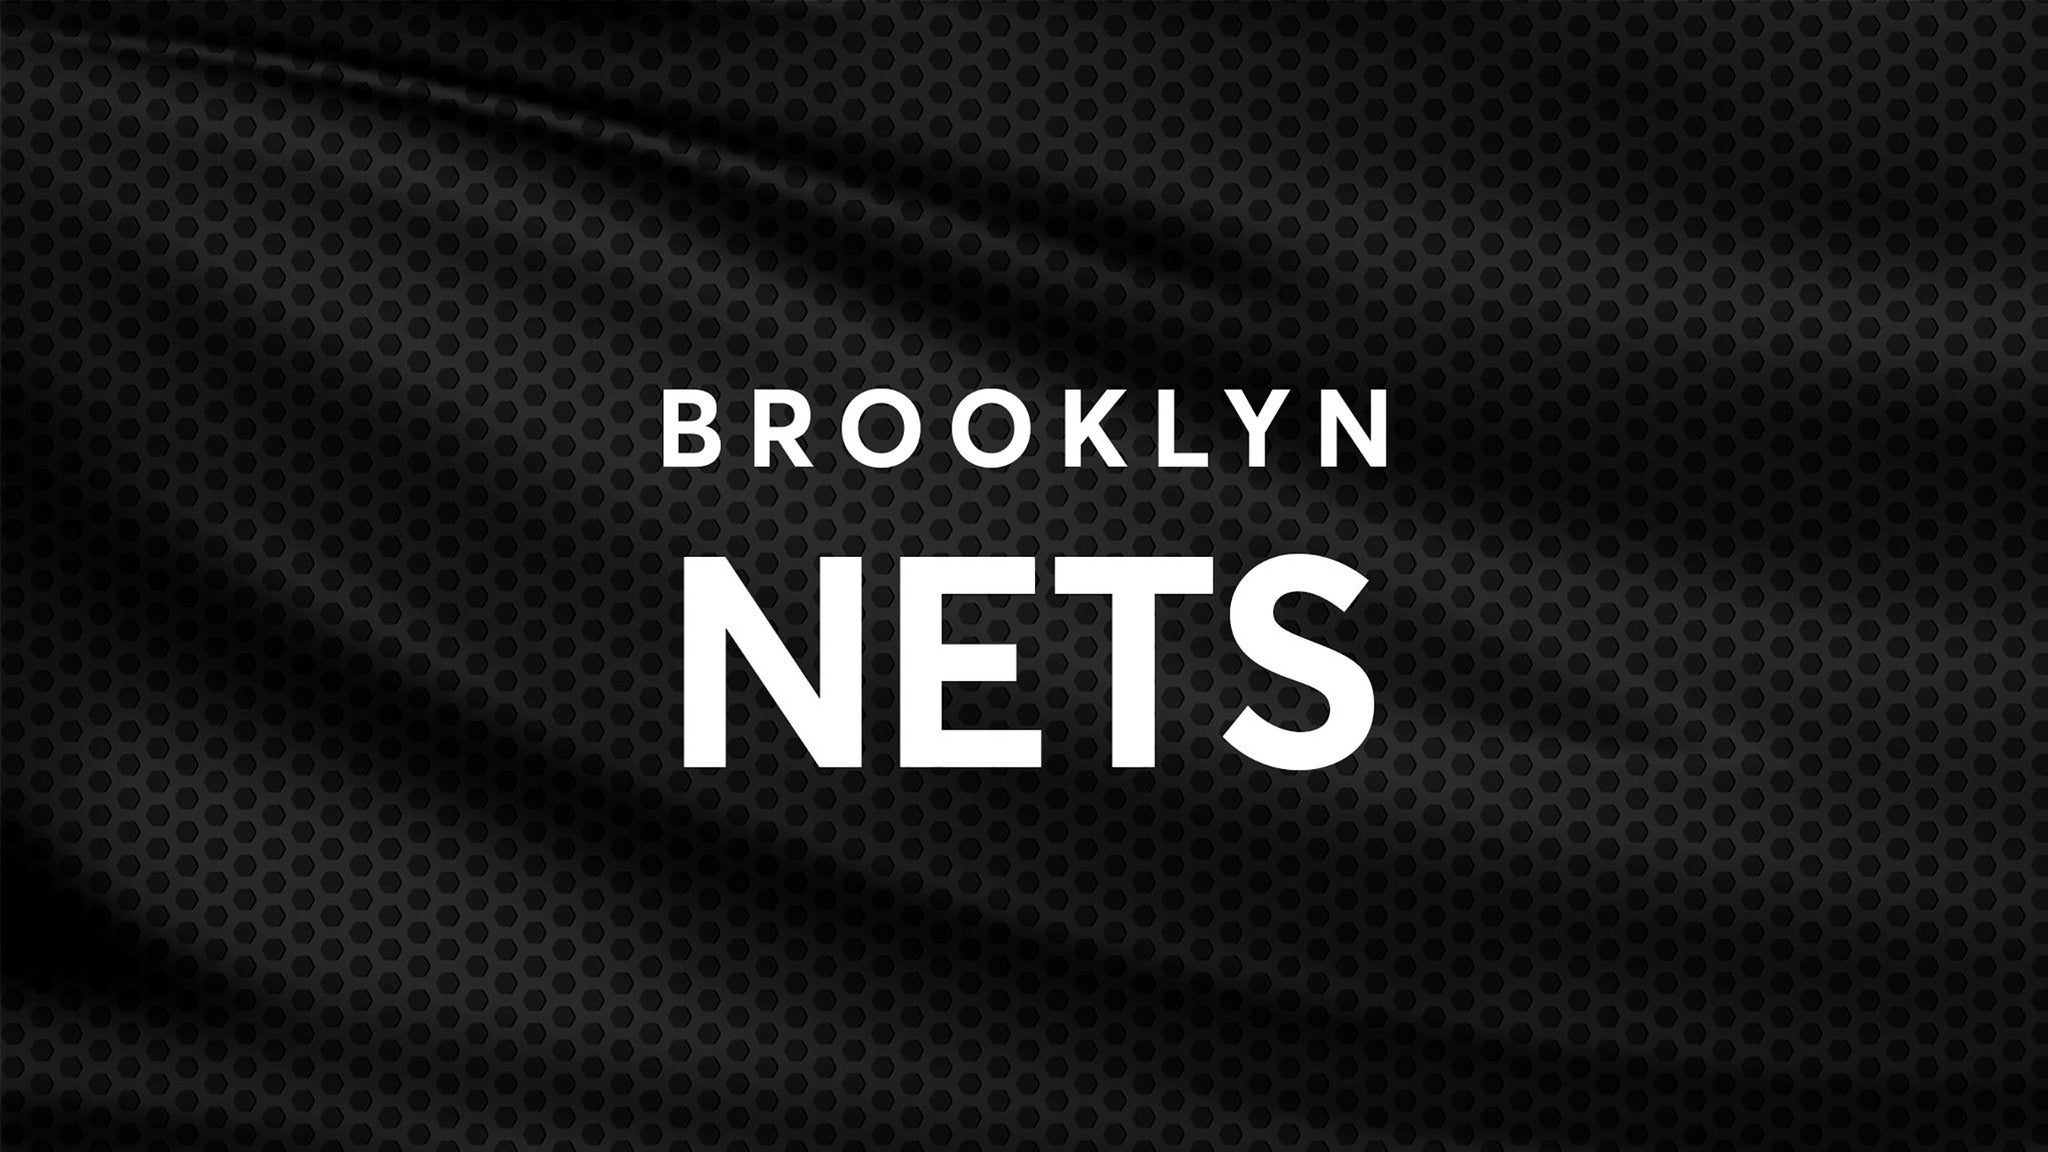 Brooklyn Nets vs. Washington Wizards